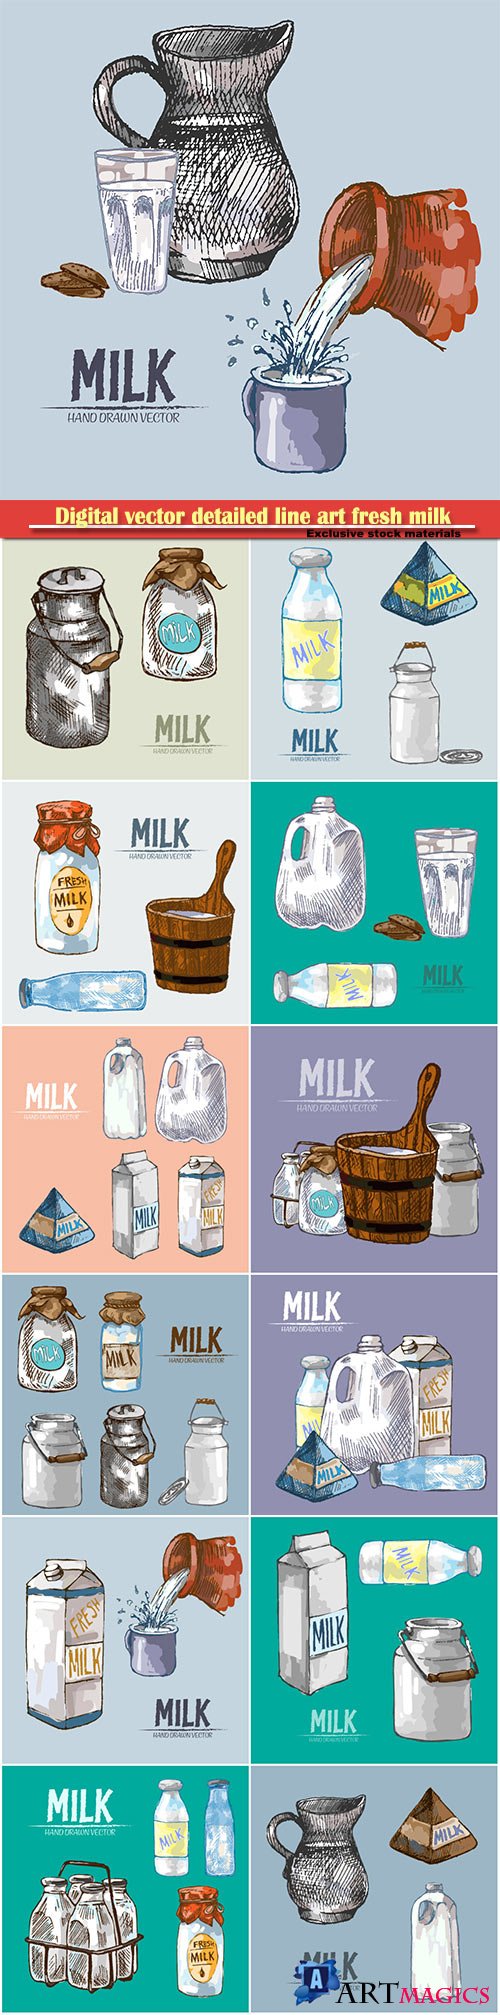 Digital vector detailed line art fresh milk in glass bottles hand drawn retro illustration collection set